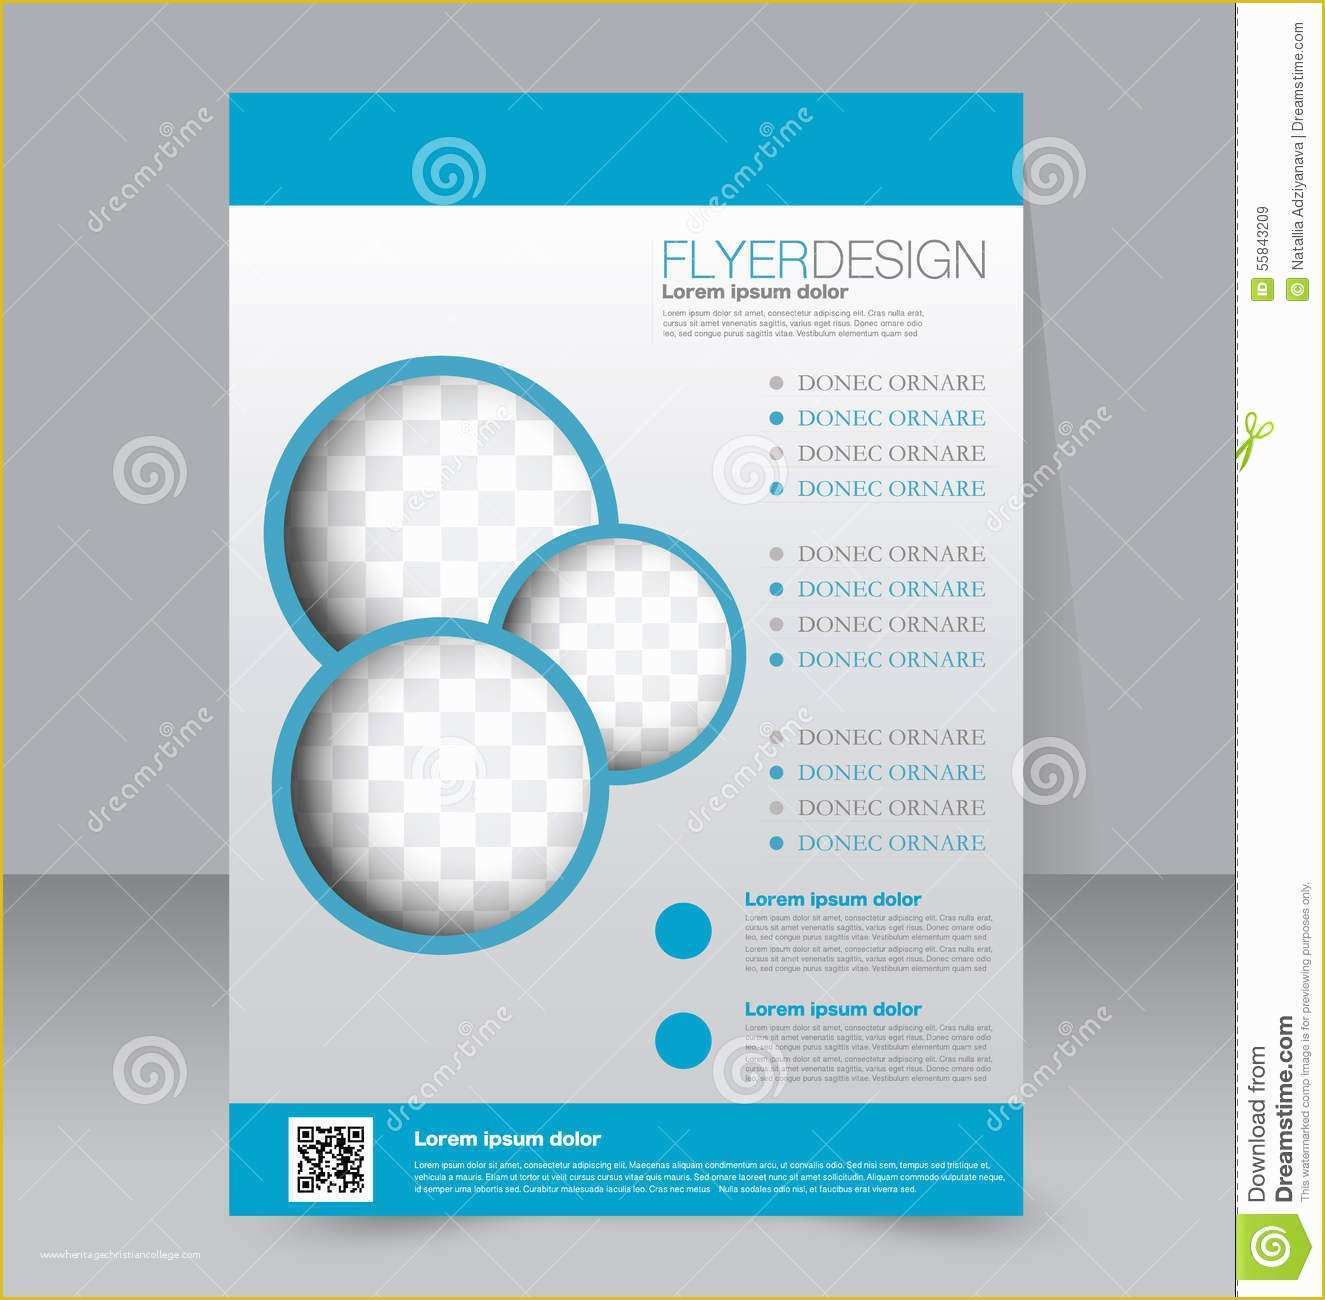 Free Editable Flyer Templates Of Editable Flyer Templates Free Download Templates